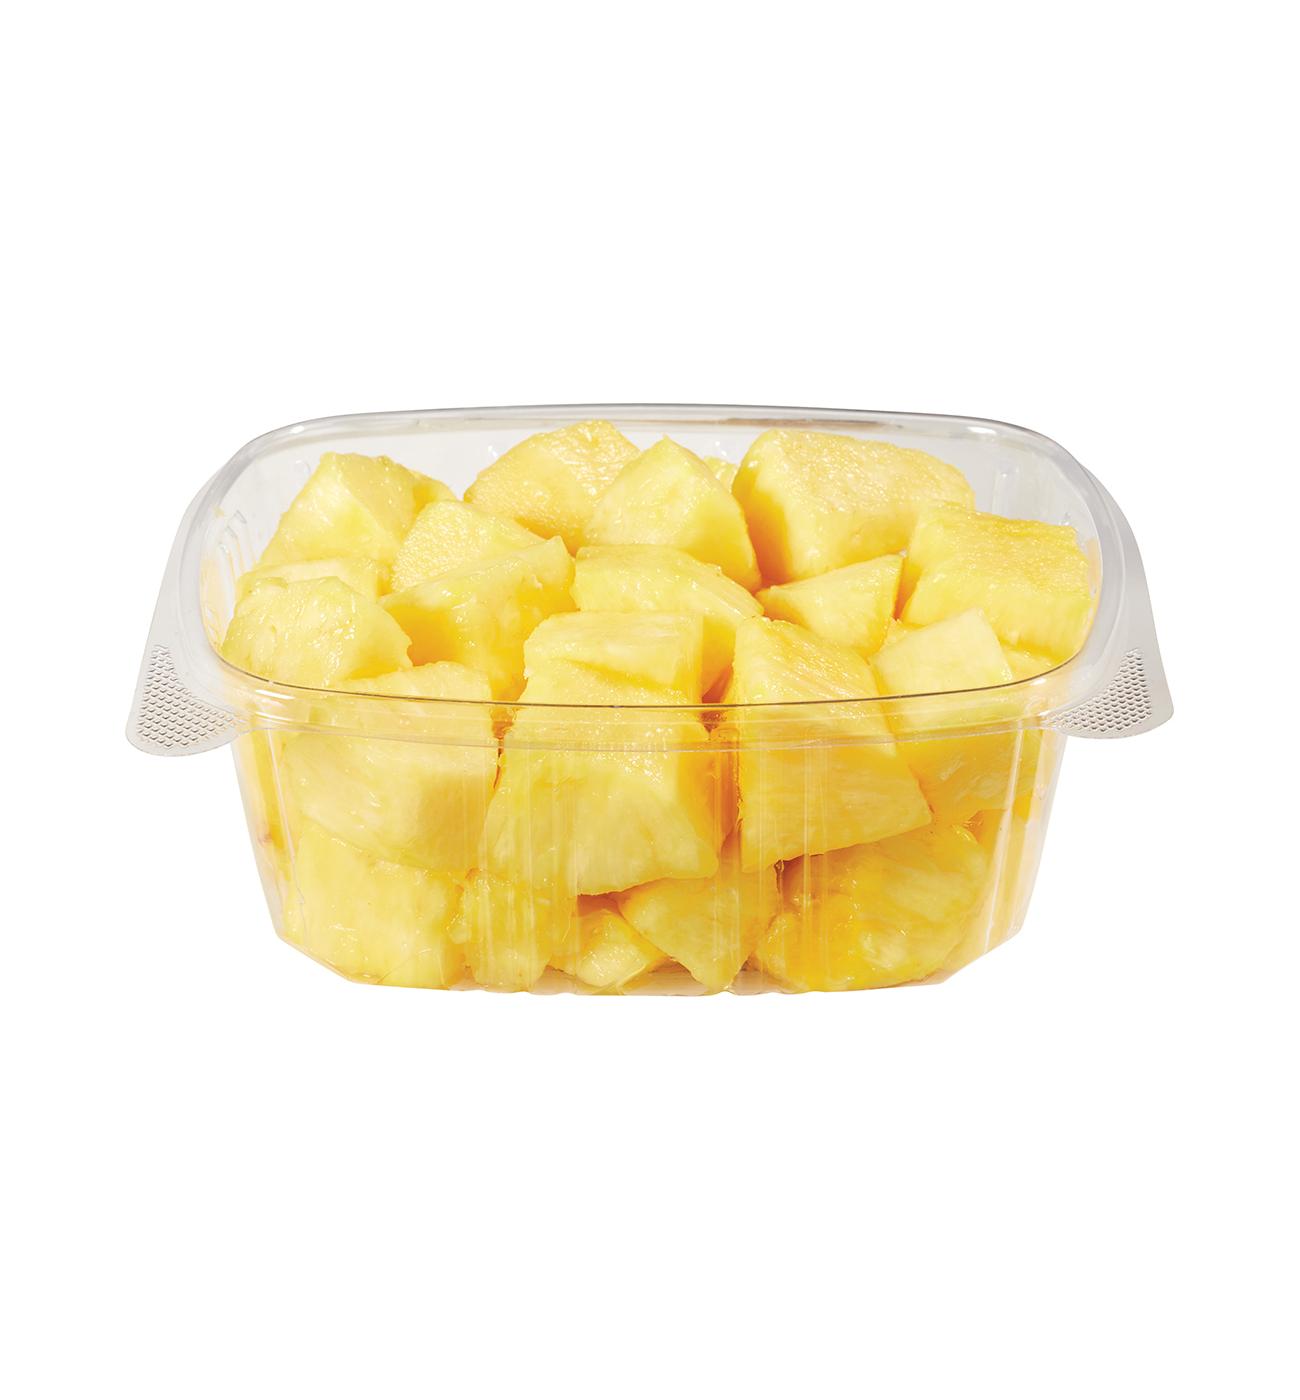 H-E-B Fresh Cut Pineapple - Large; image 2 of 2